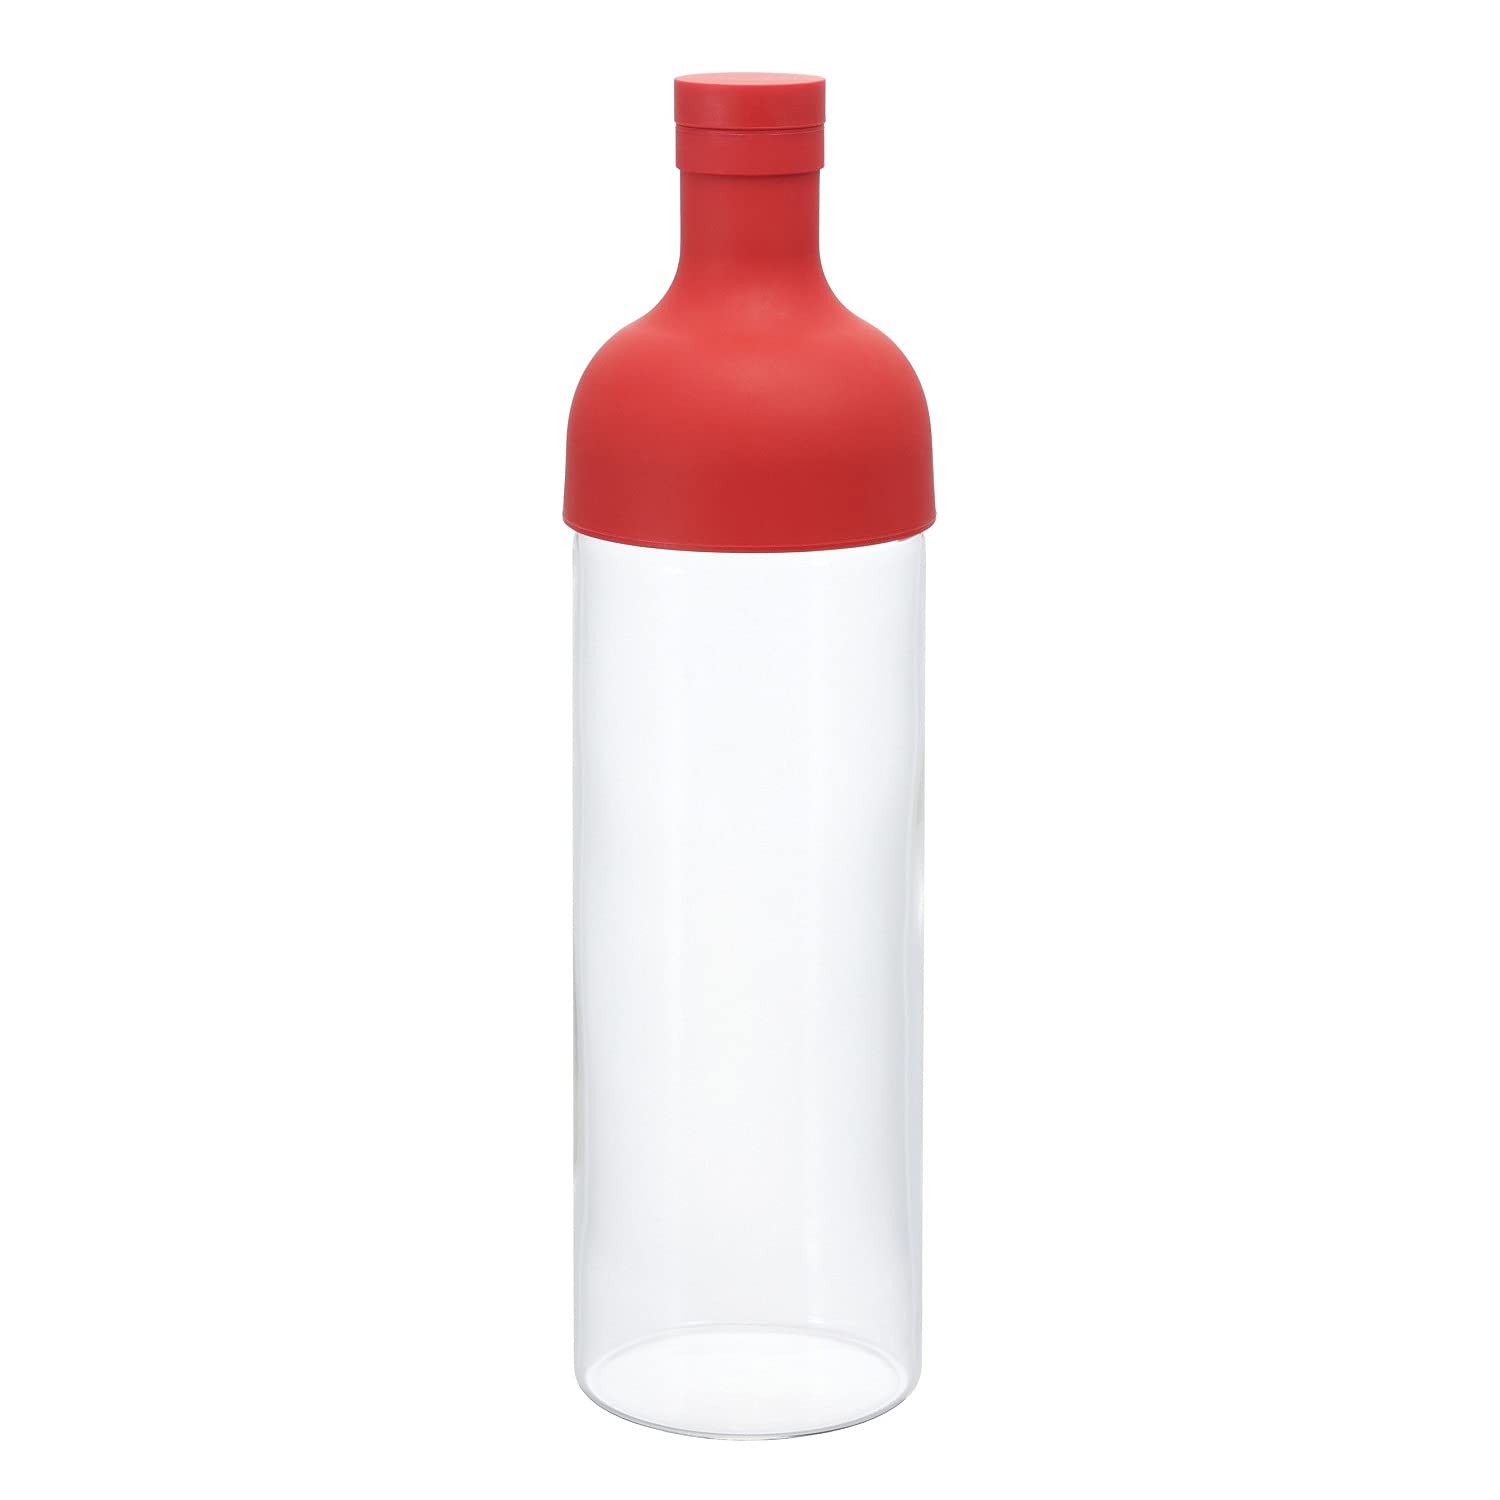 Hario 4977642034419 Filter Bottle 750ml Red FIB-75-R (Japan Import), Kunststoff, rot, 10 x 10 x 25 cm